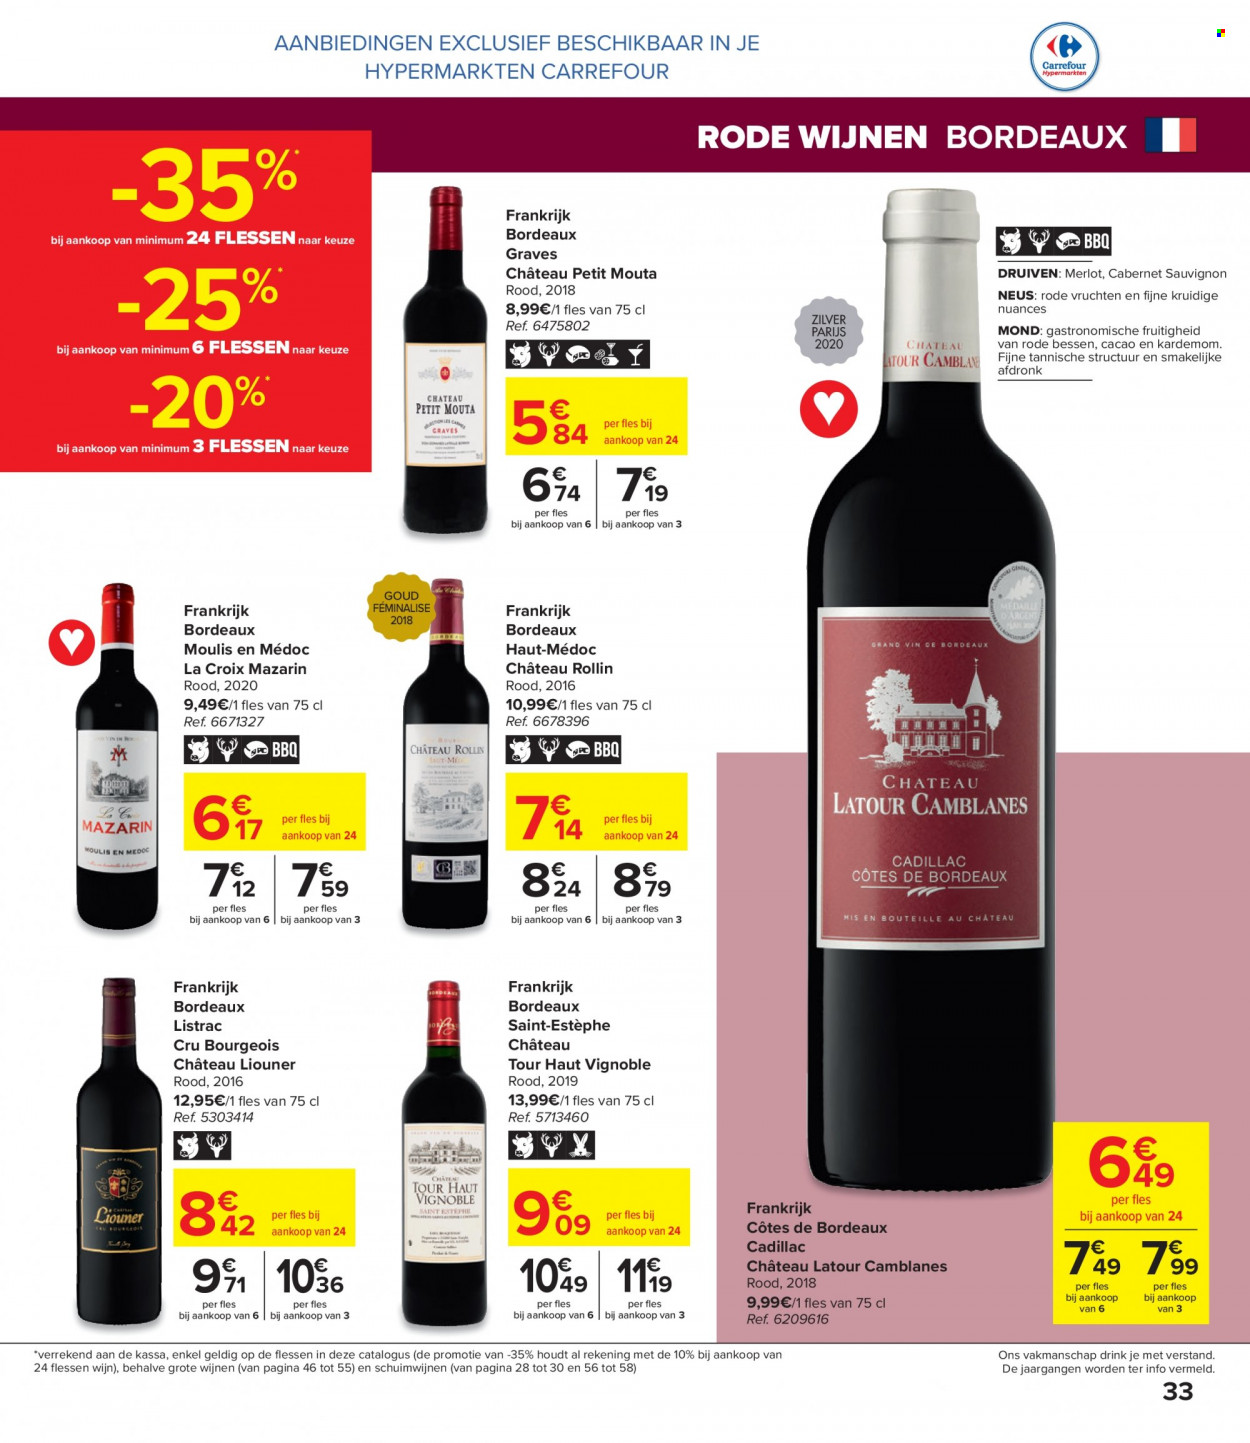 thumbnail - Carrefour hypermarkt-aanbieding - 15/09/2021 - 04/10/2021 -  producten in de aanbieding - bessen, druiven, rode vruchten, kardemom, BBQ, Cabernet Sauvignon, Merlot, wijn. Pagina 3.